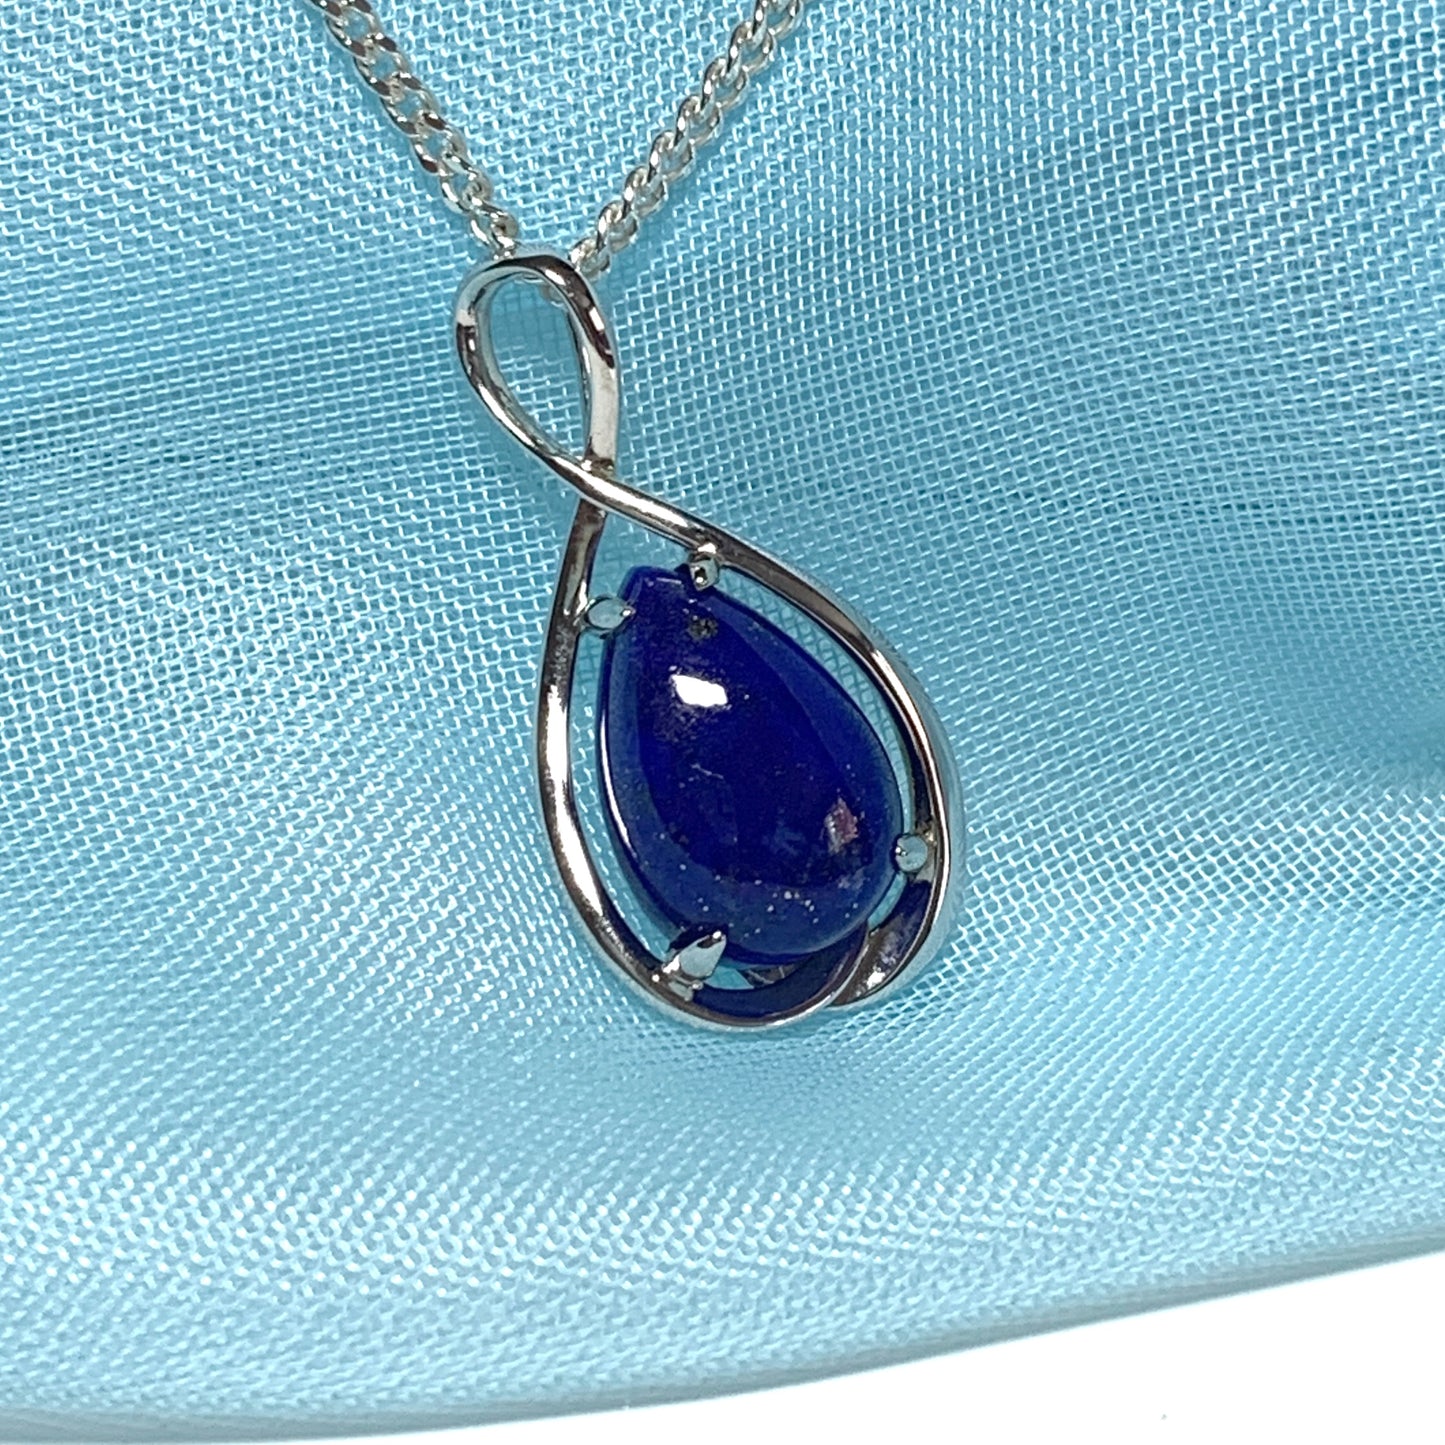 White gold pear teardrop shaped blue lapis lazuli necklace pendant